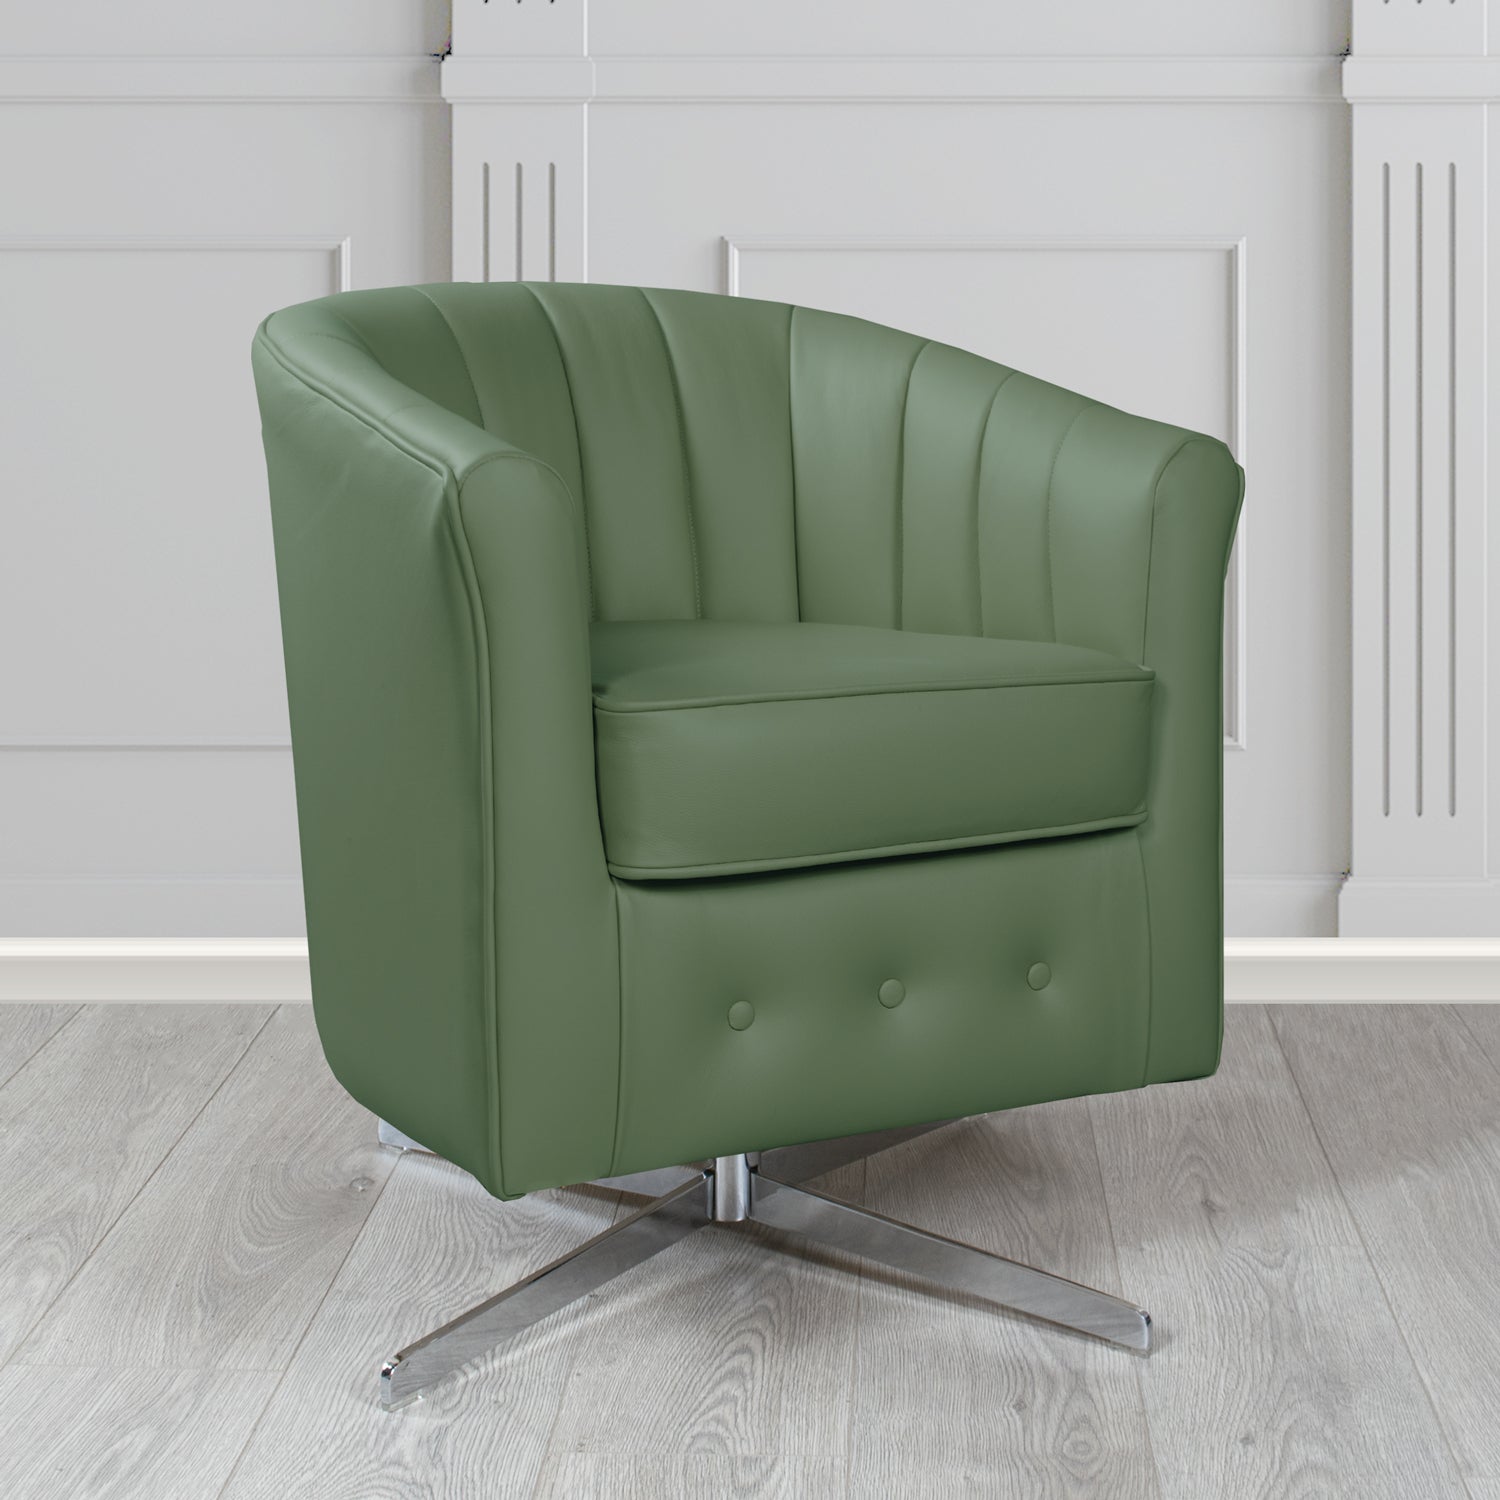 Doha Swivel Tub Chair in Vele Kale Genuine Leather